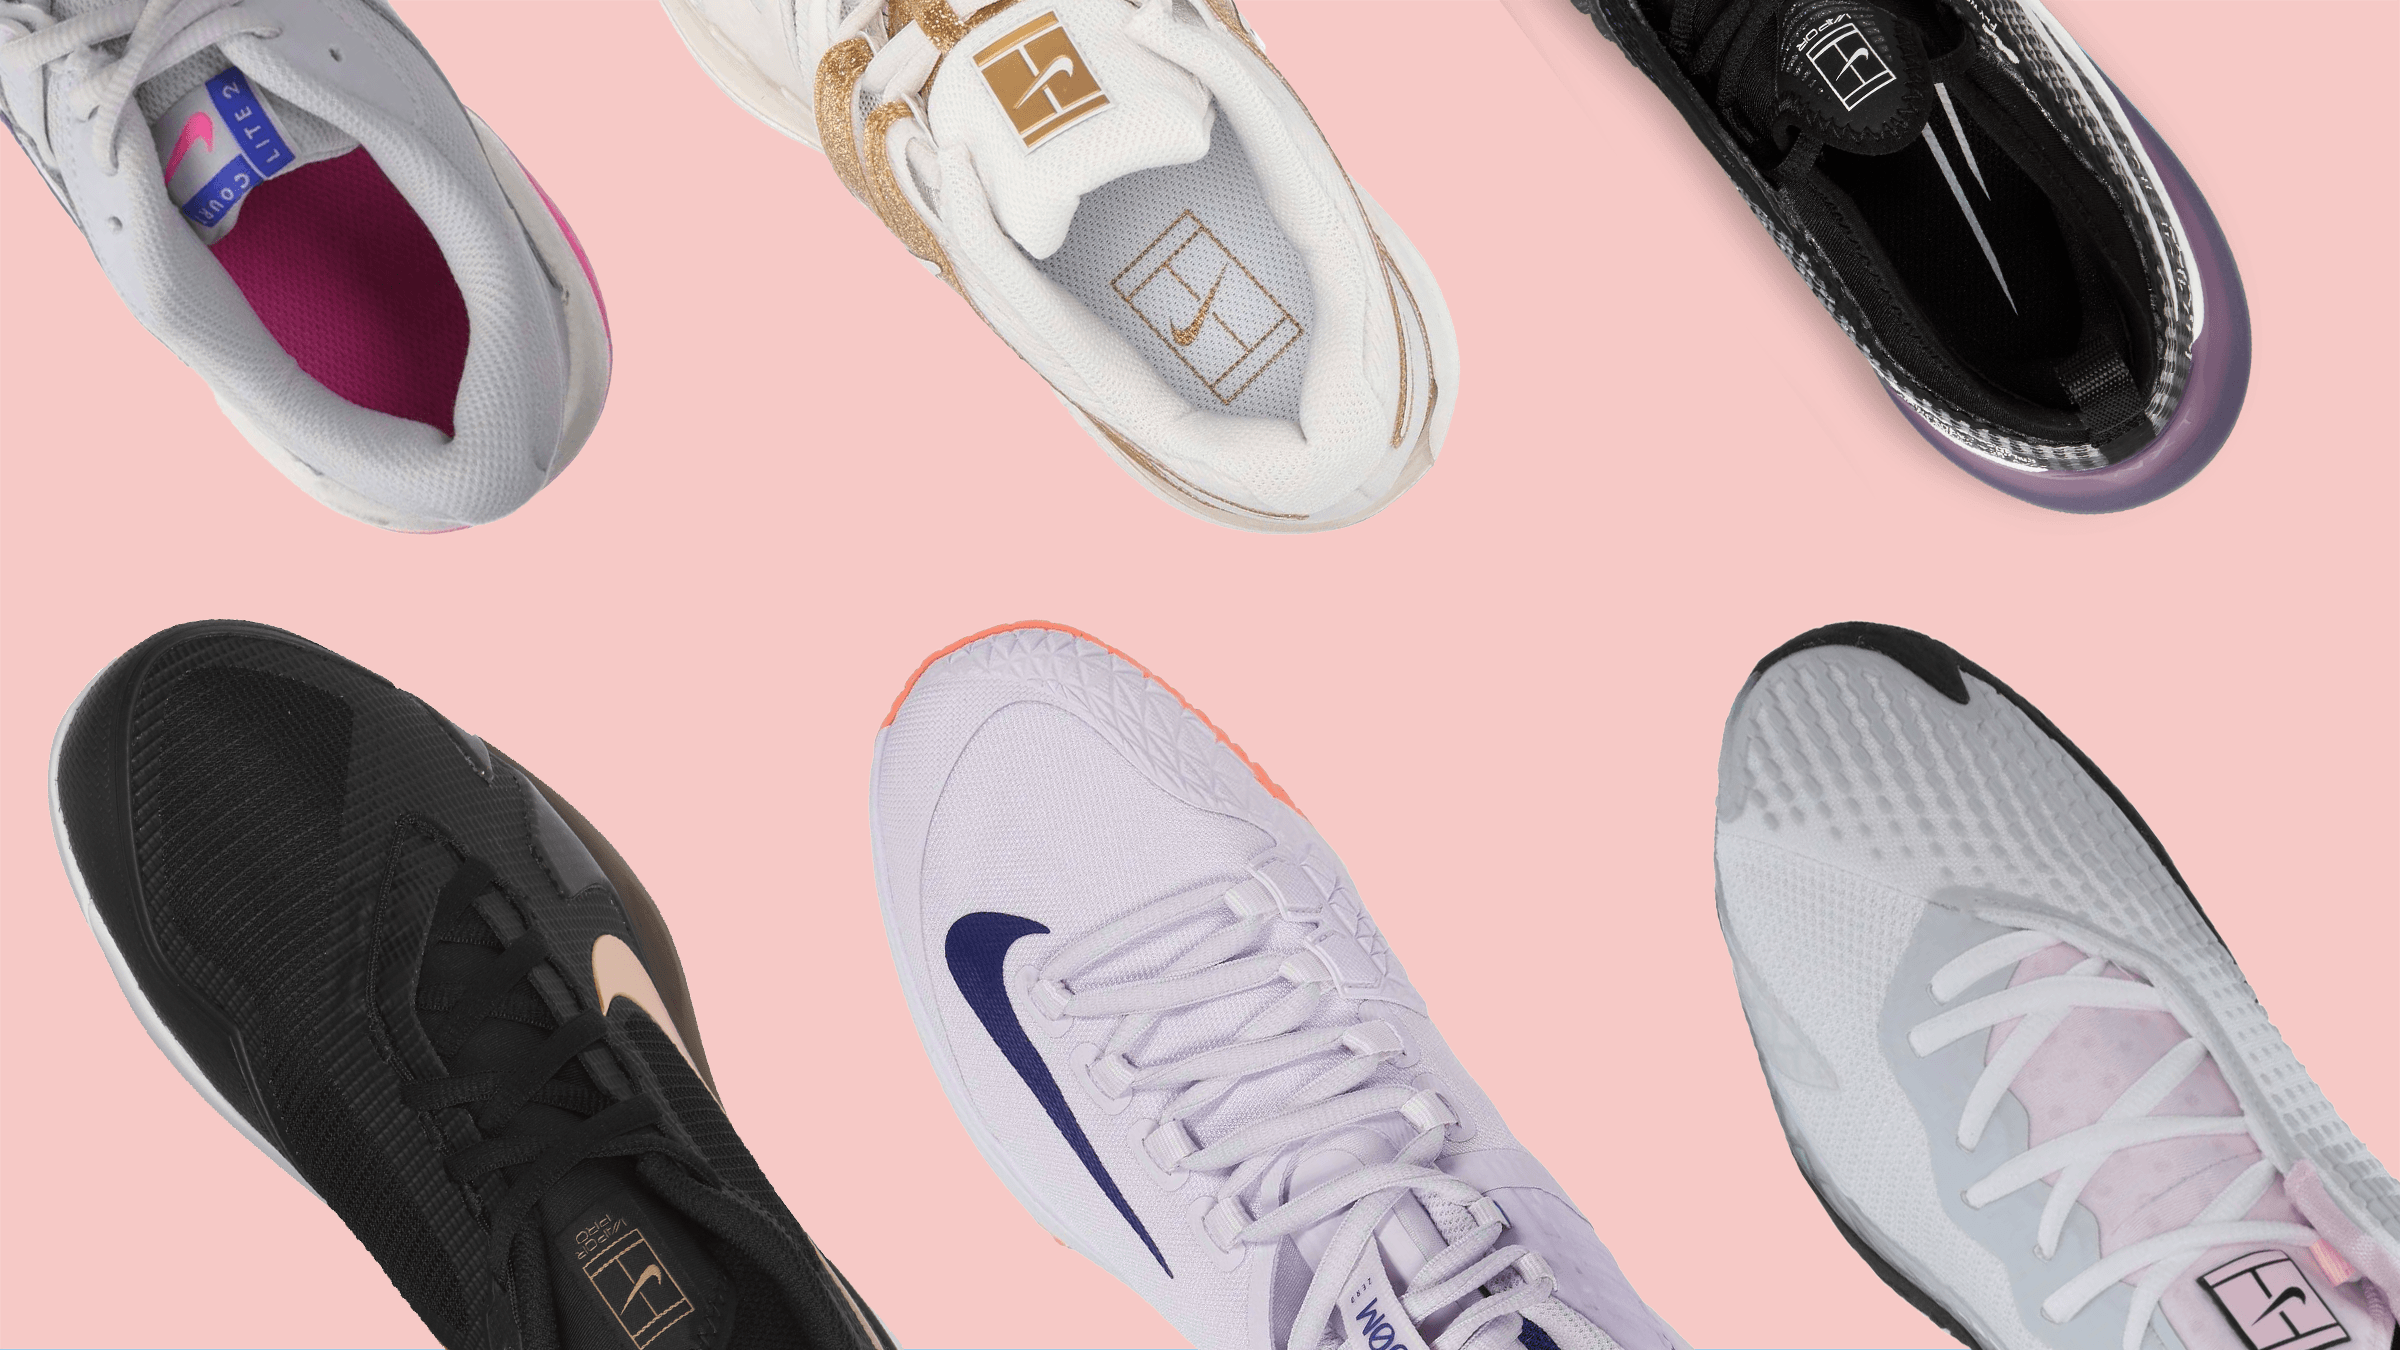 6 Best Nike Tennis Shoes For Women in 2022